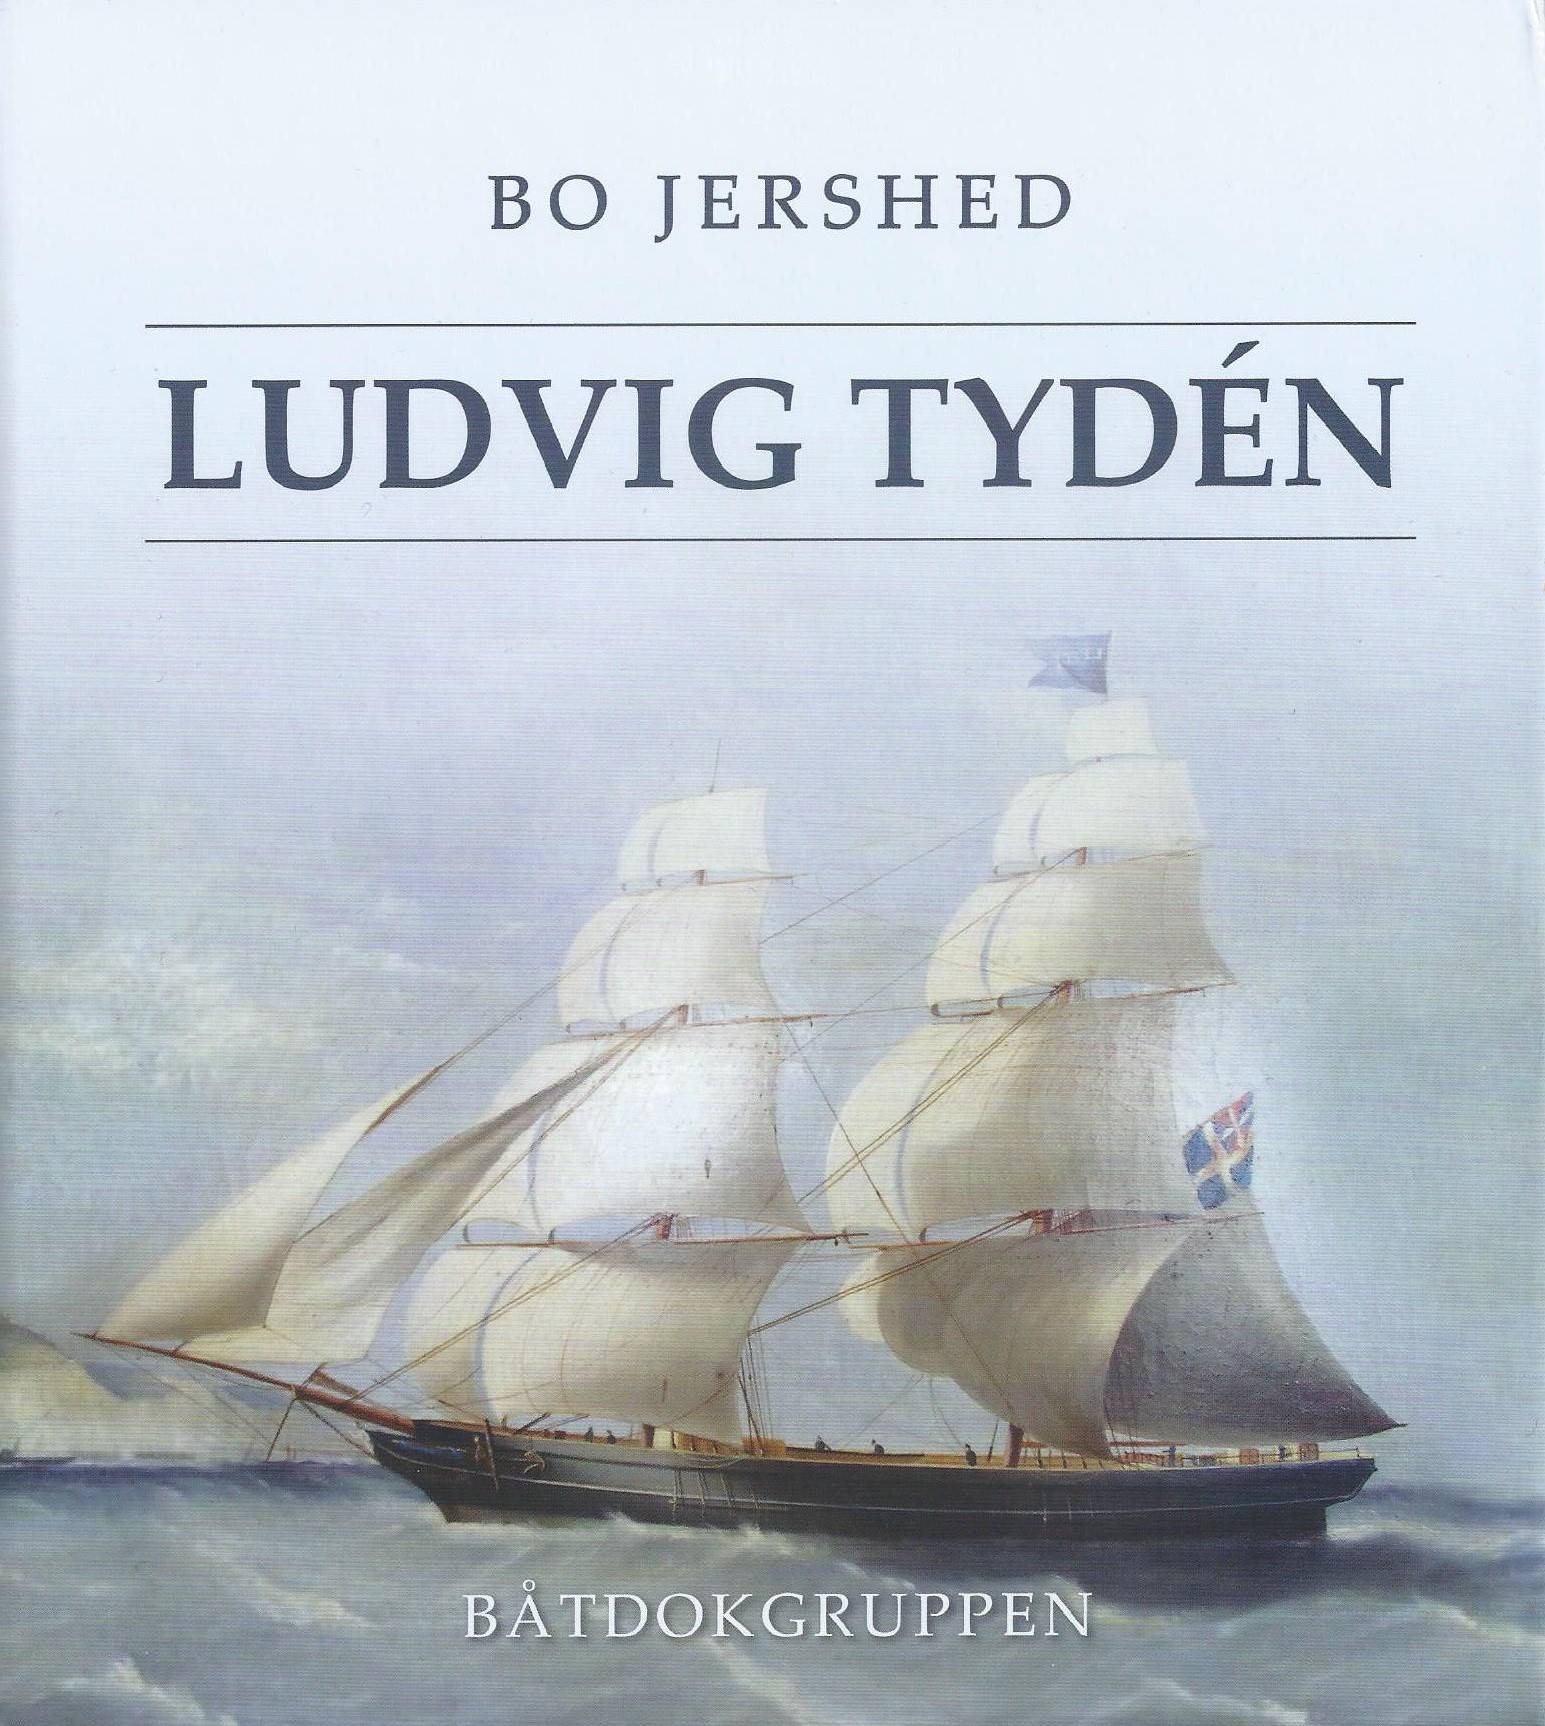 Grosshandlaren och redaren Ludvig Tydén